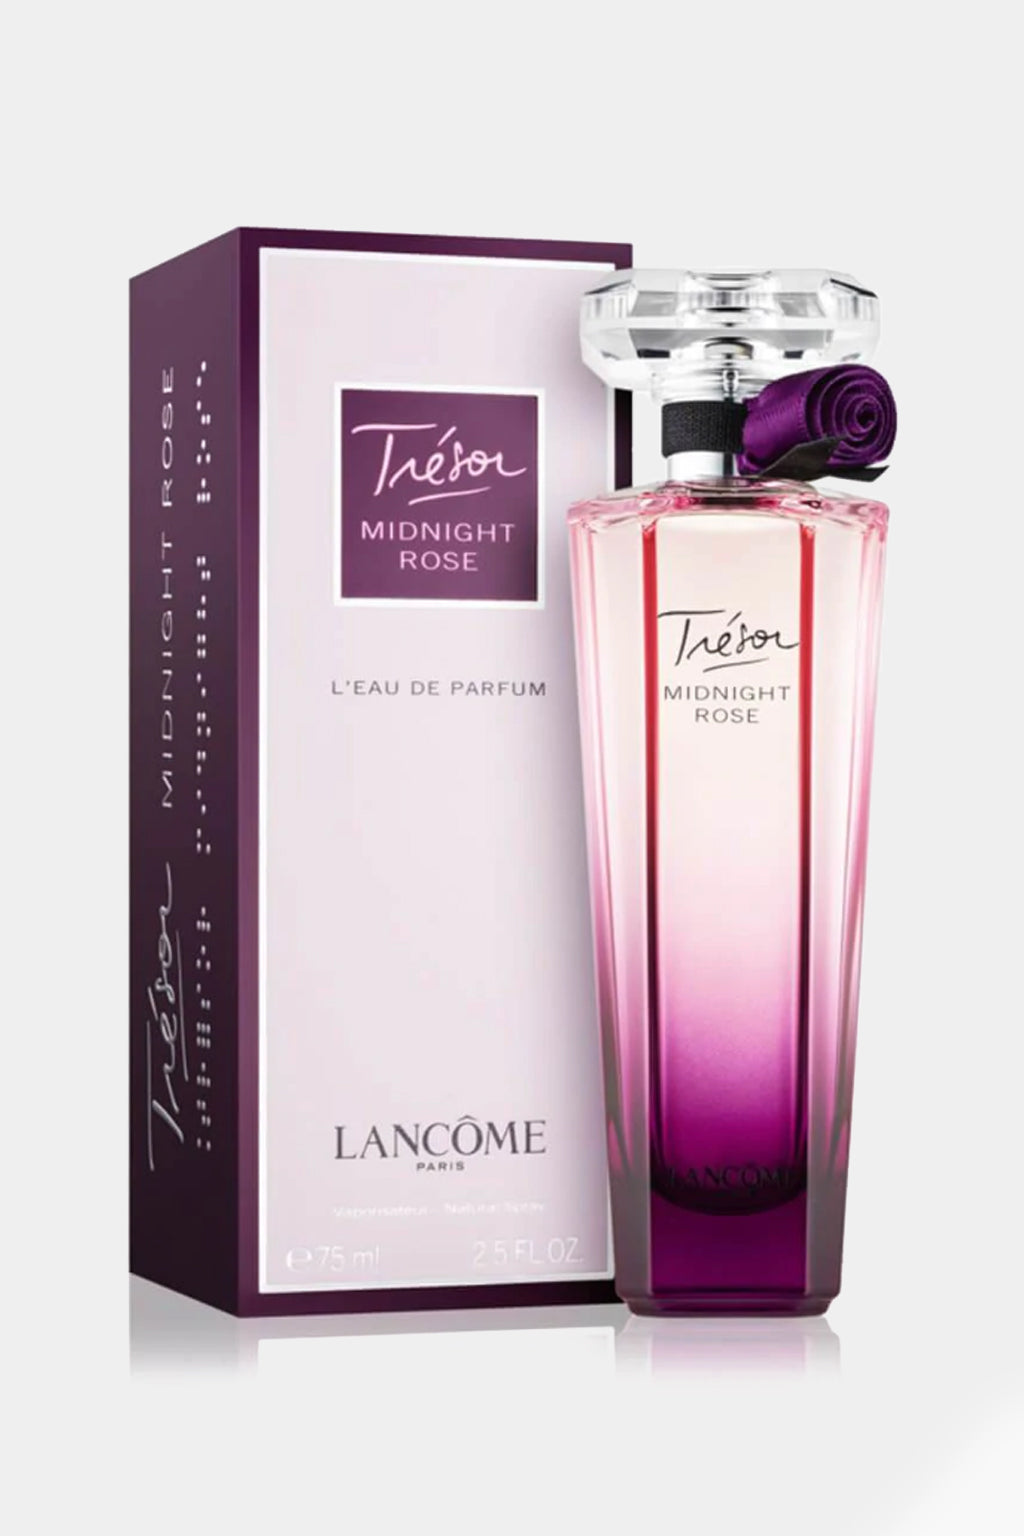 Lancom Paris - Tresor Midnight Rose Eau de Parfum